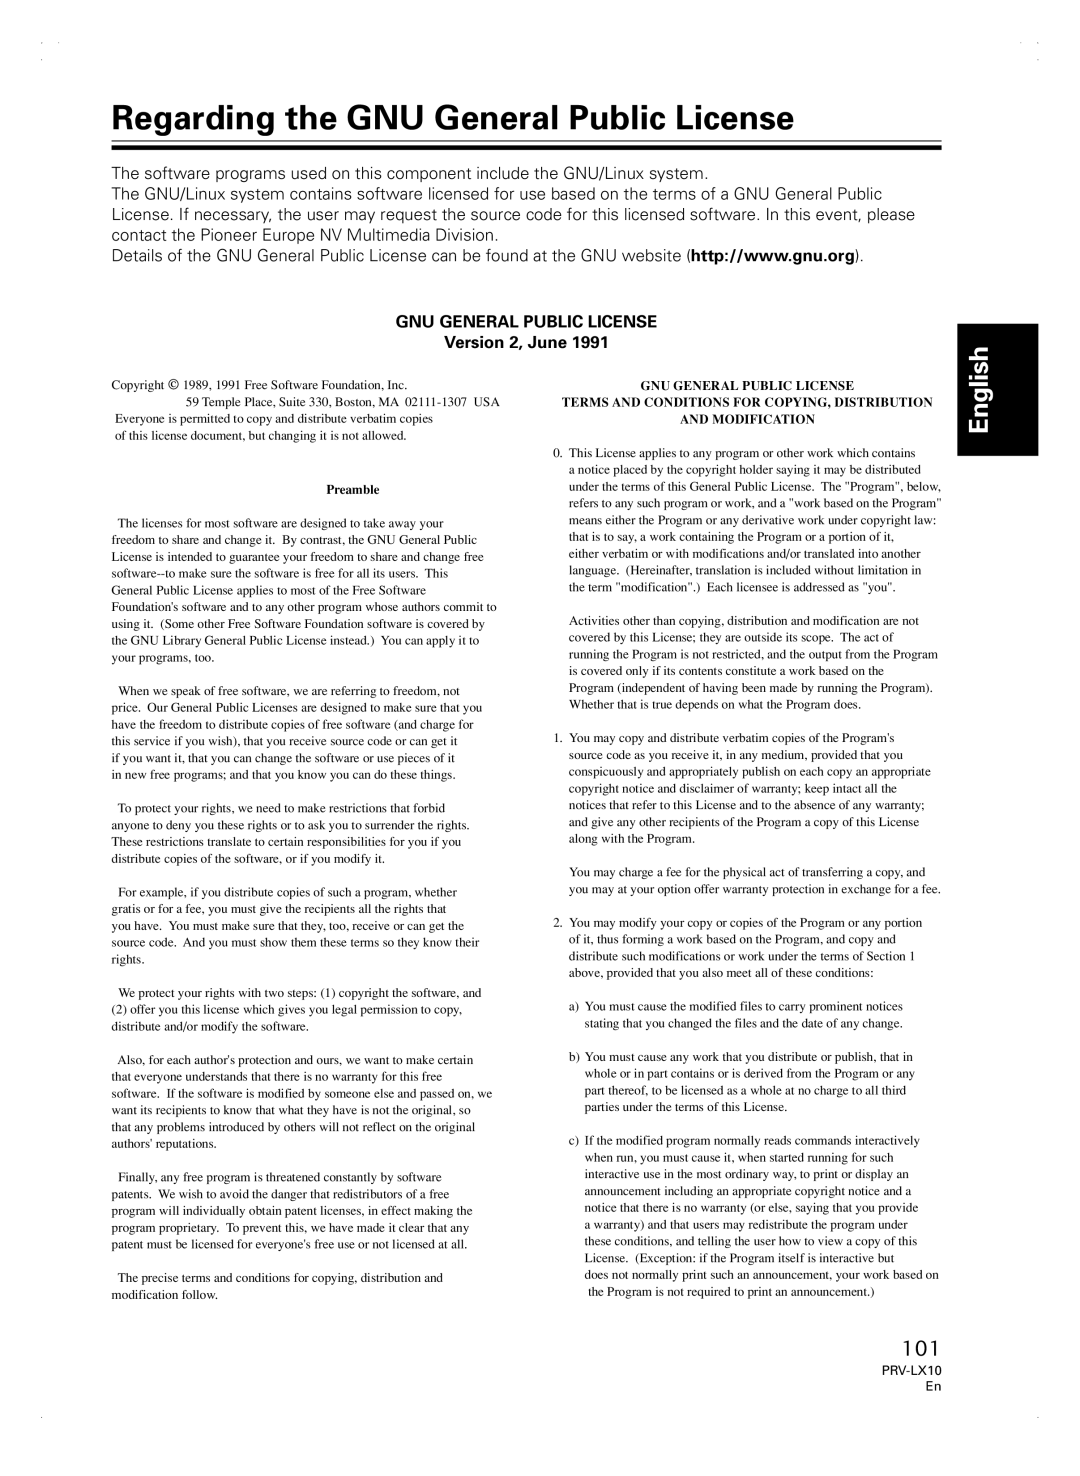 Pioneer PRV-LX10 manual Regarding the GNU General Public License, Version 2, June 